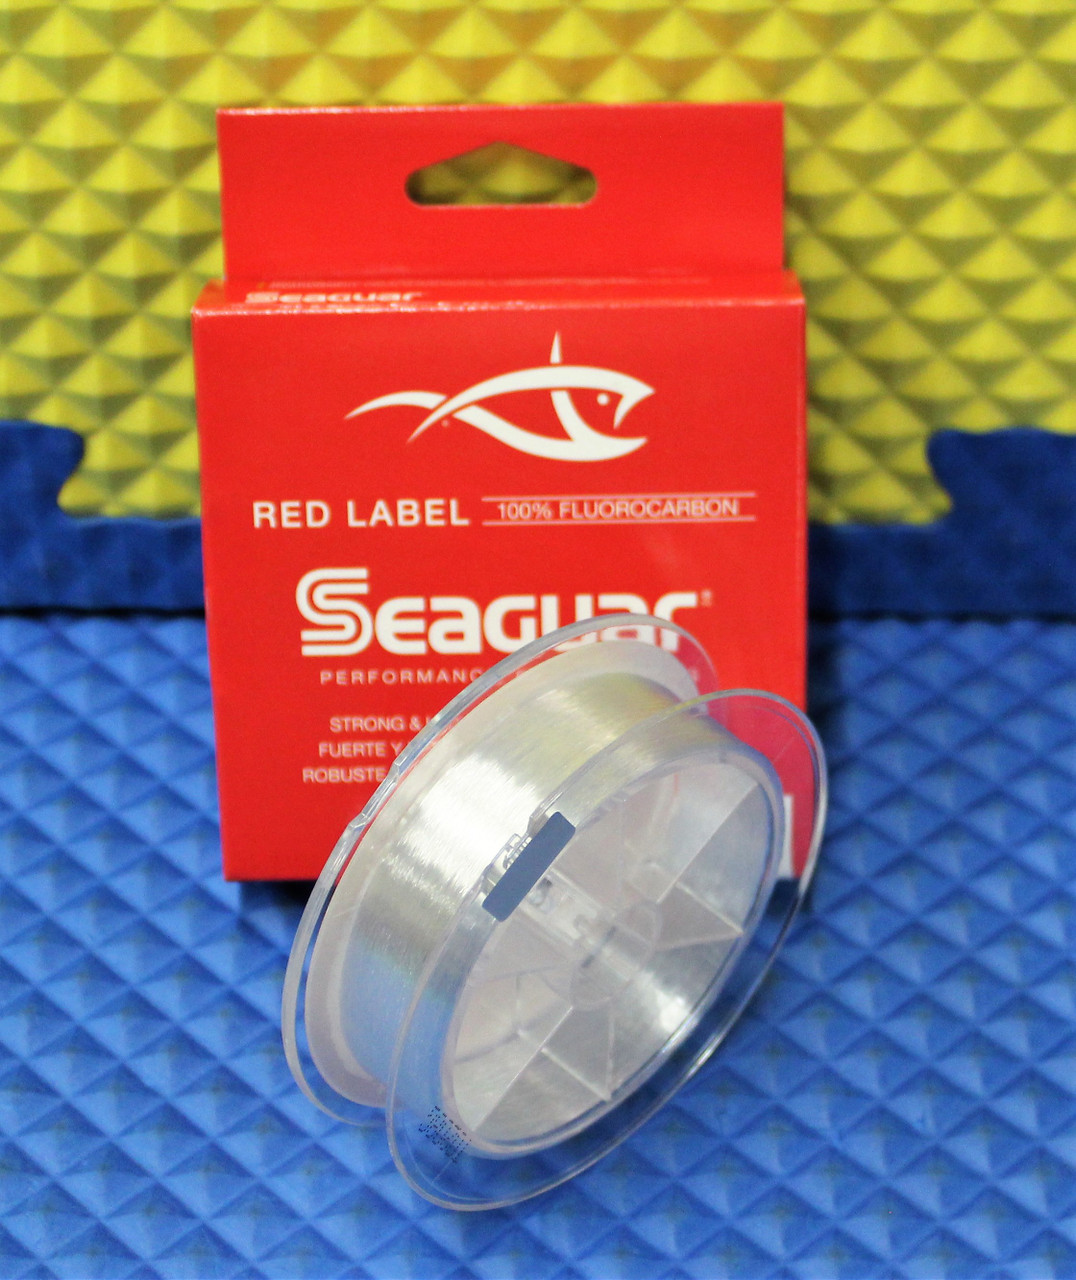 Seaguar Red Label 100% Fluorocarbon Line Clear CHOOSE YOUR LINE